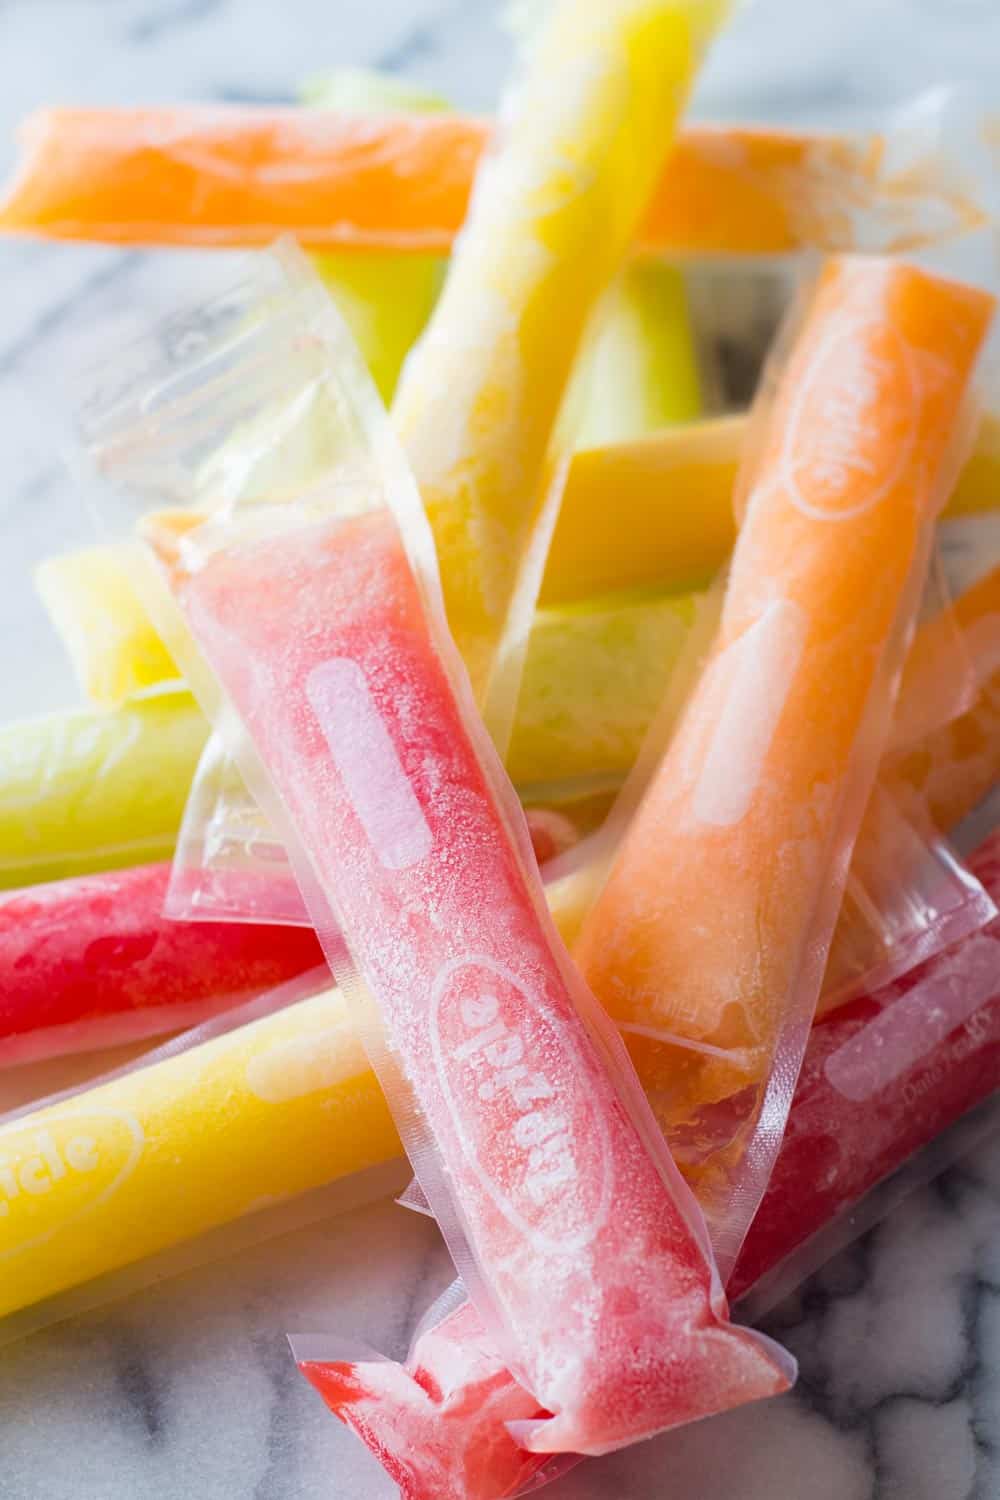 Sugar-free ice pops